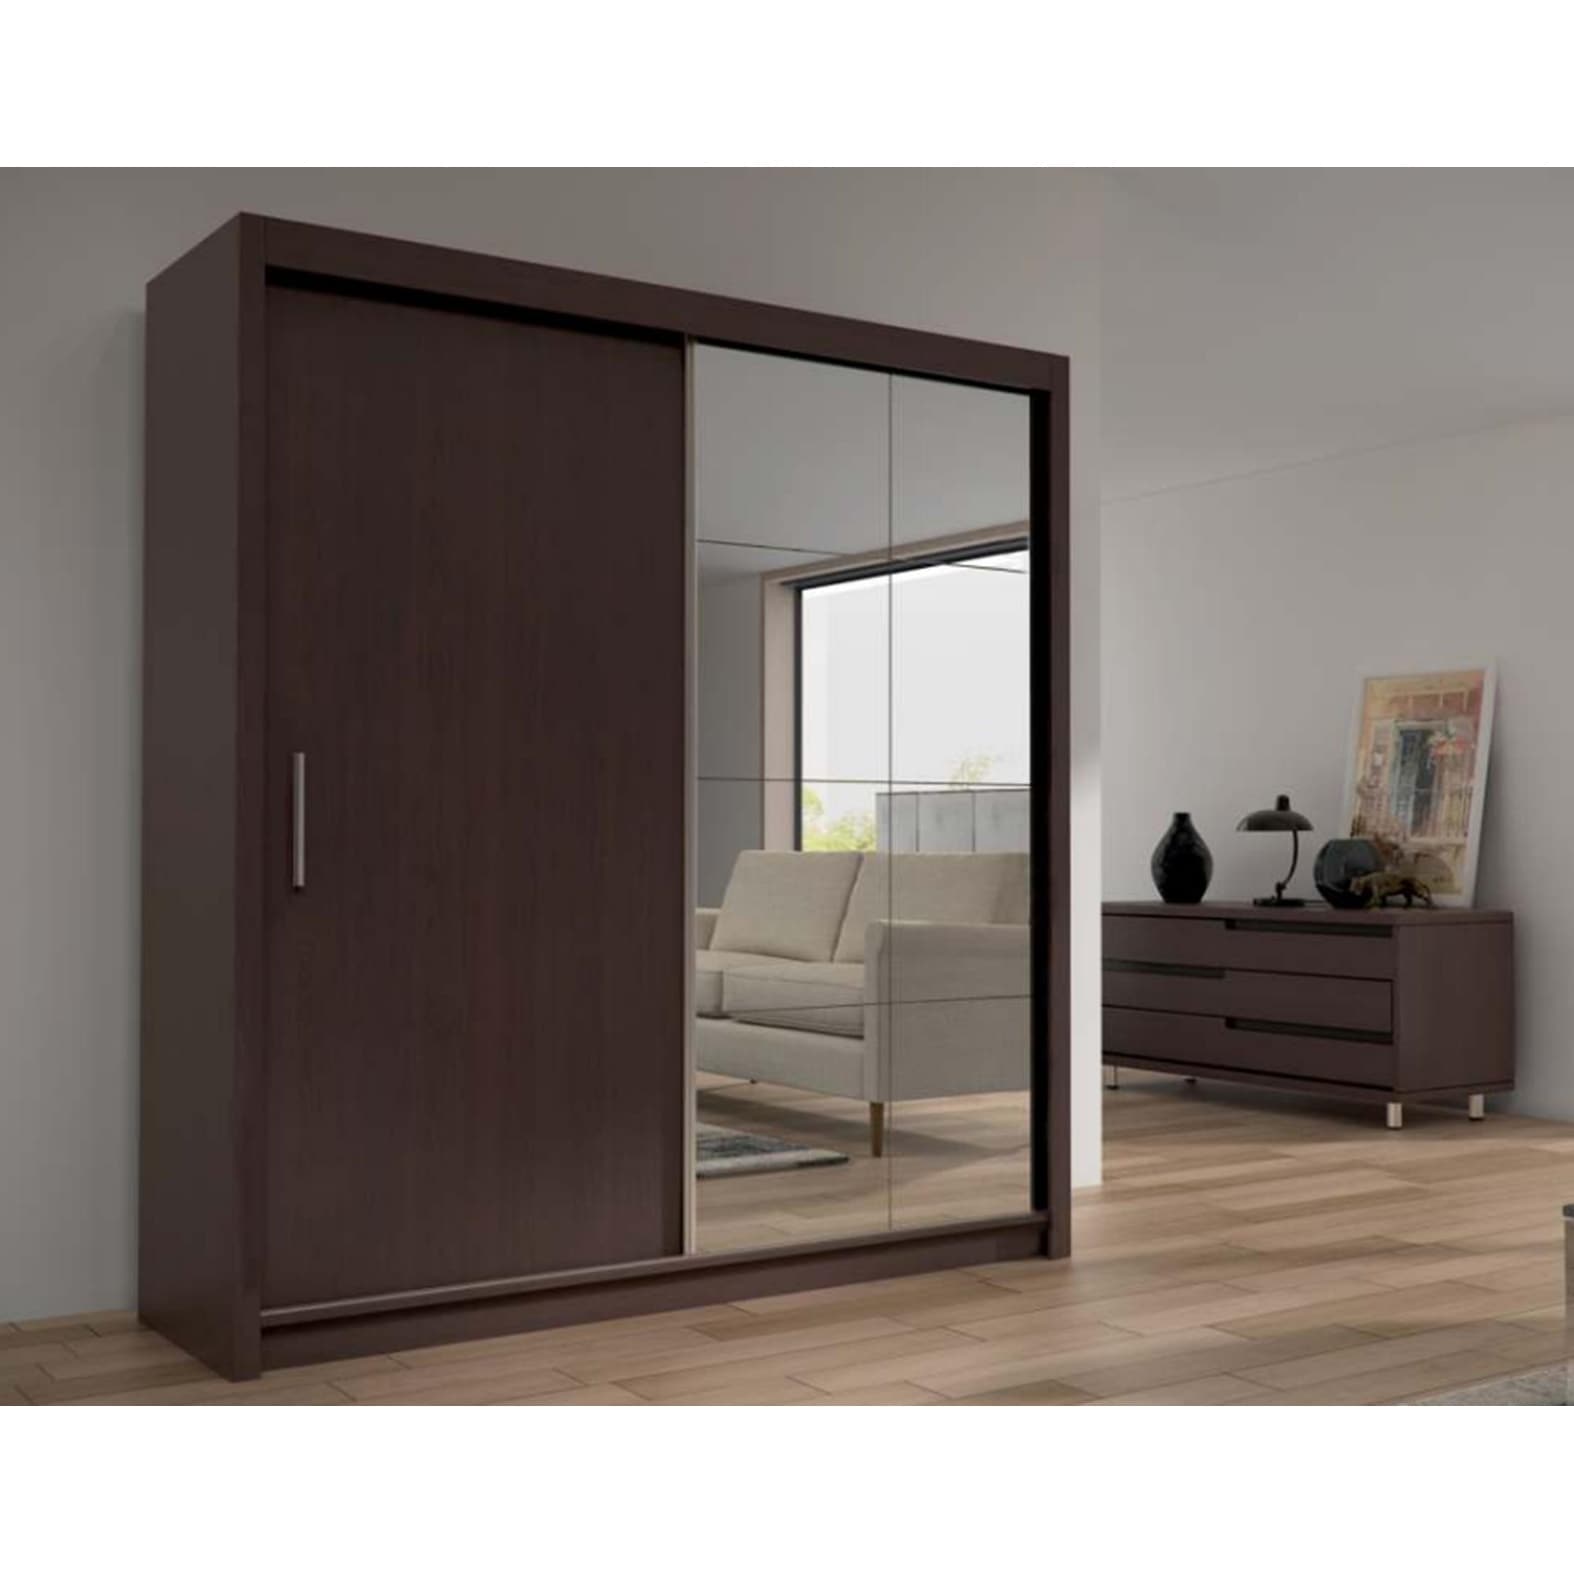 Cedar 2 Door Solid Wood Modern Wardrobe Armoire With Mirror Espresso 79 Wide Overstock 30860326 White